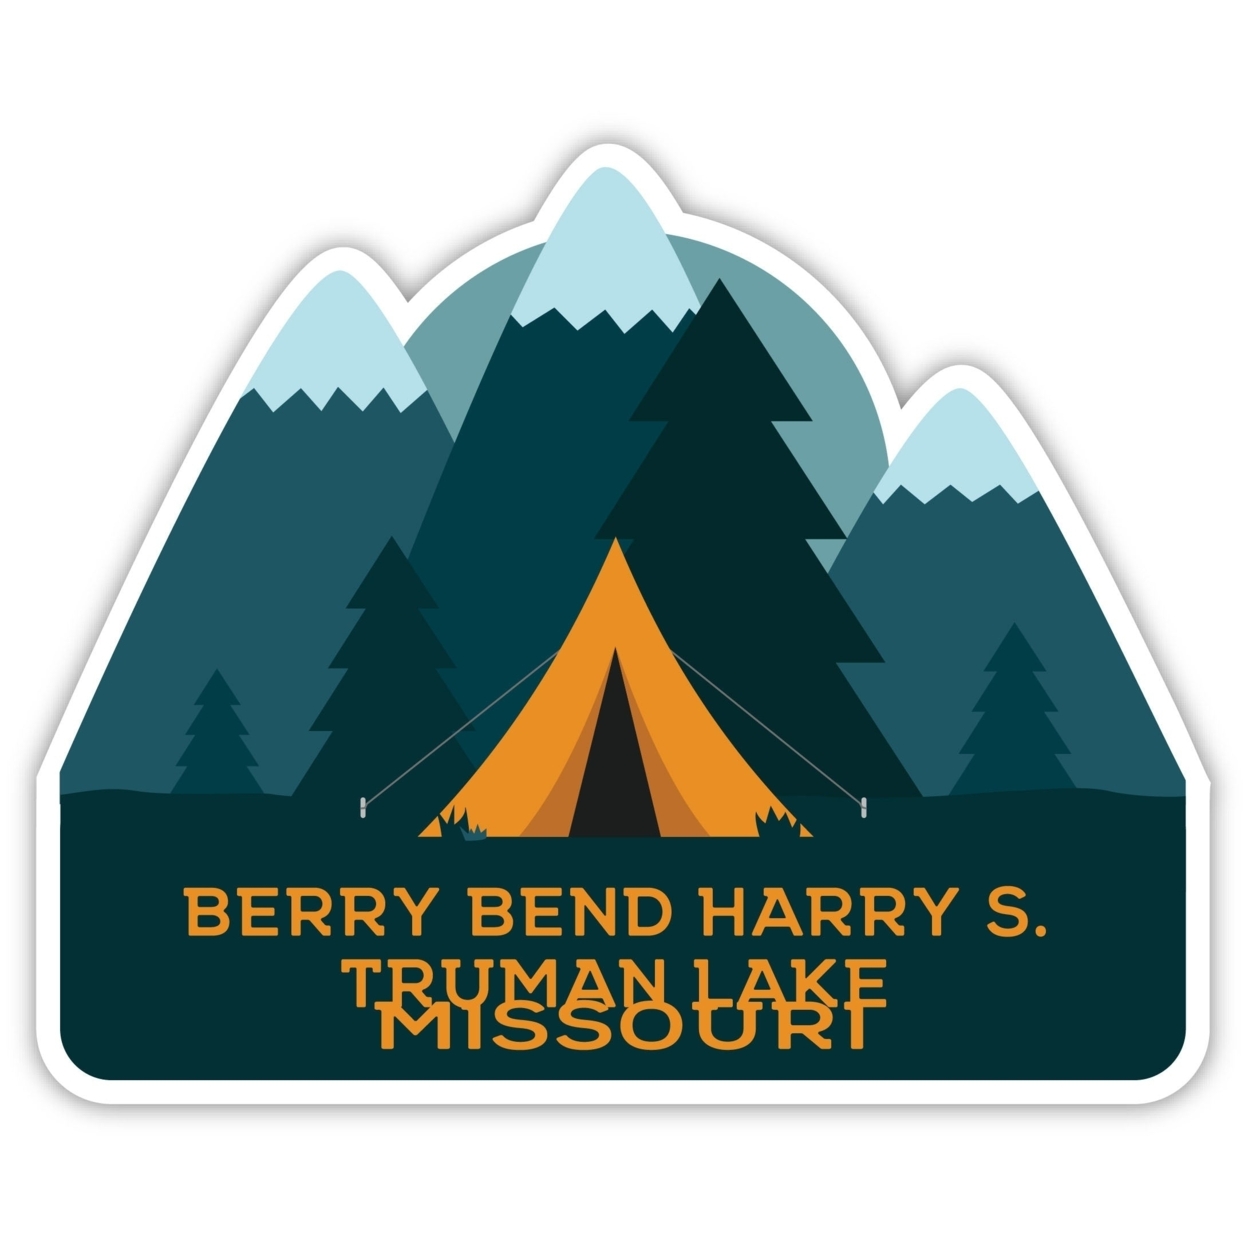 Berry Bend Harry S. Truman Lake Missouri Souvenir Decorative Stickers (Choose Theme And Size) - Single Unit, 12-Inch, Tent